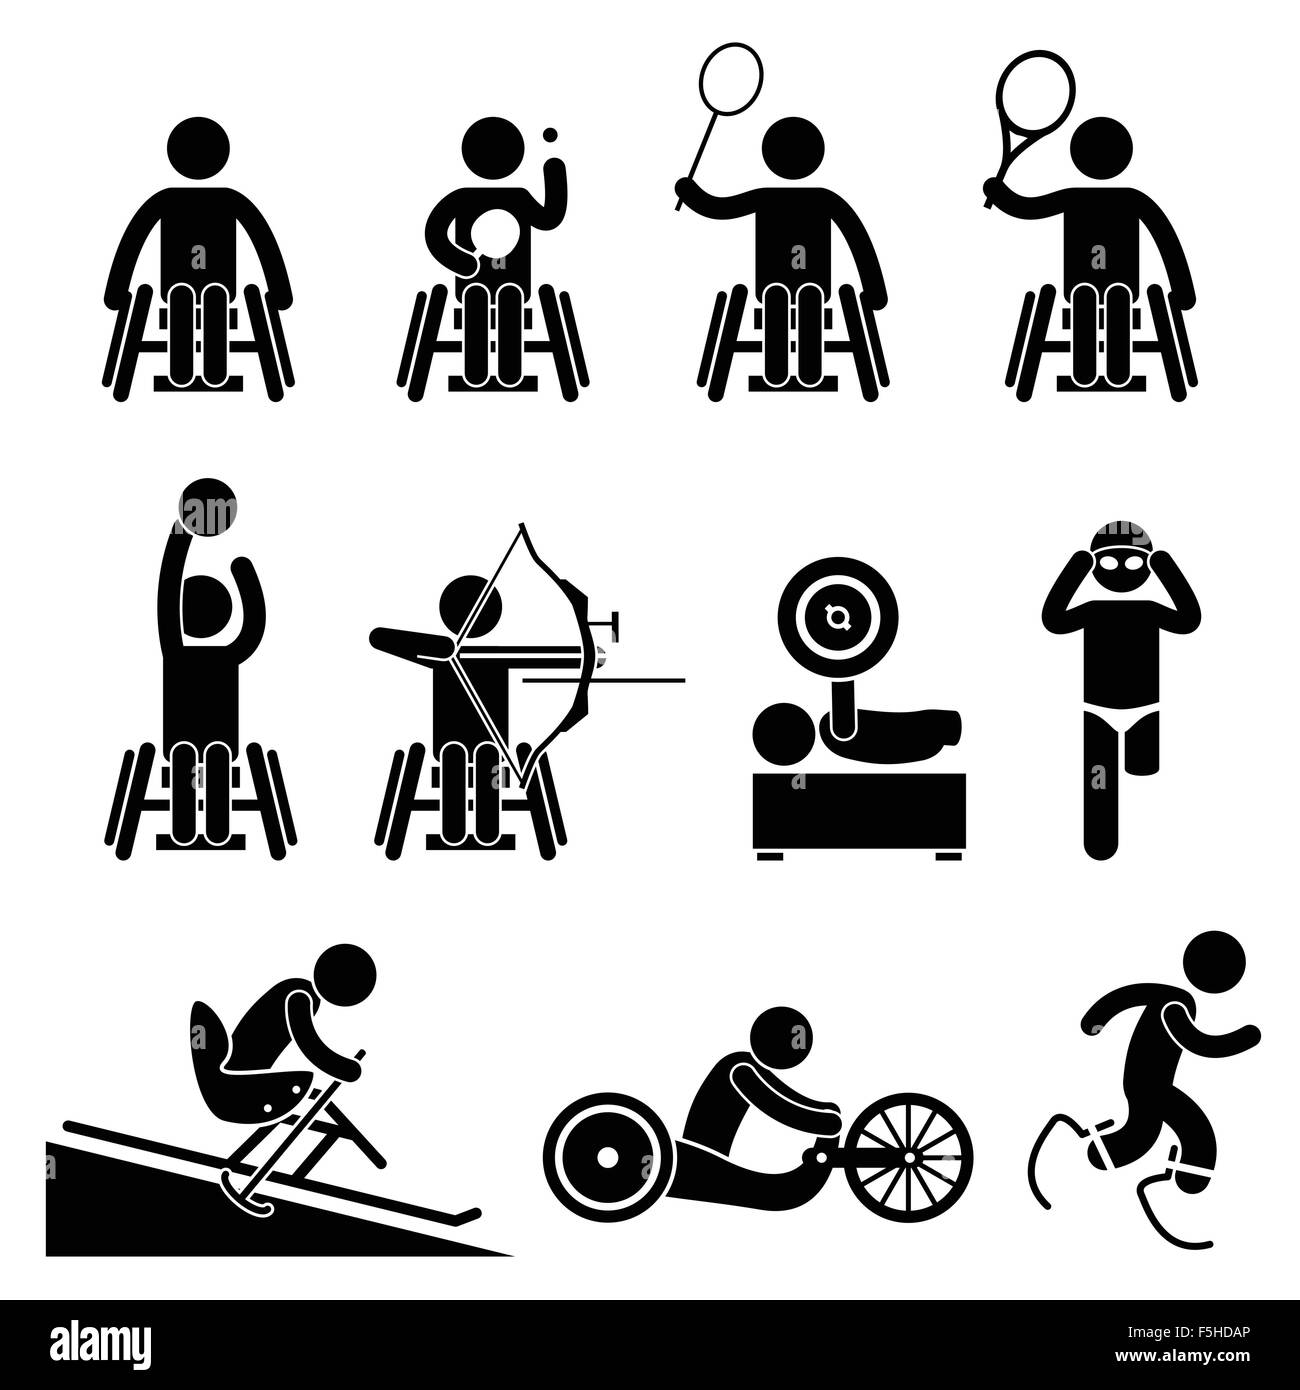 Disable Handicap Sport Paralympic Games Stick Figure Pictogram Icons Stock Vector